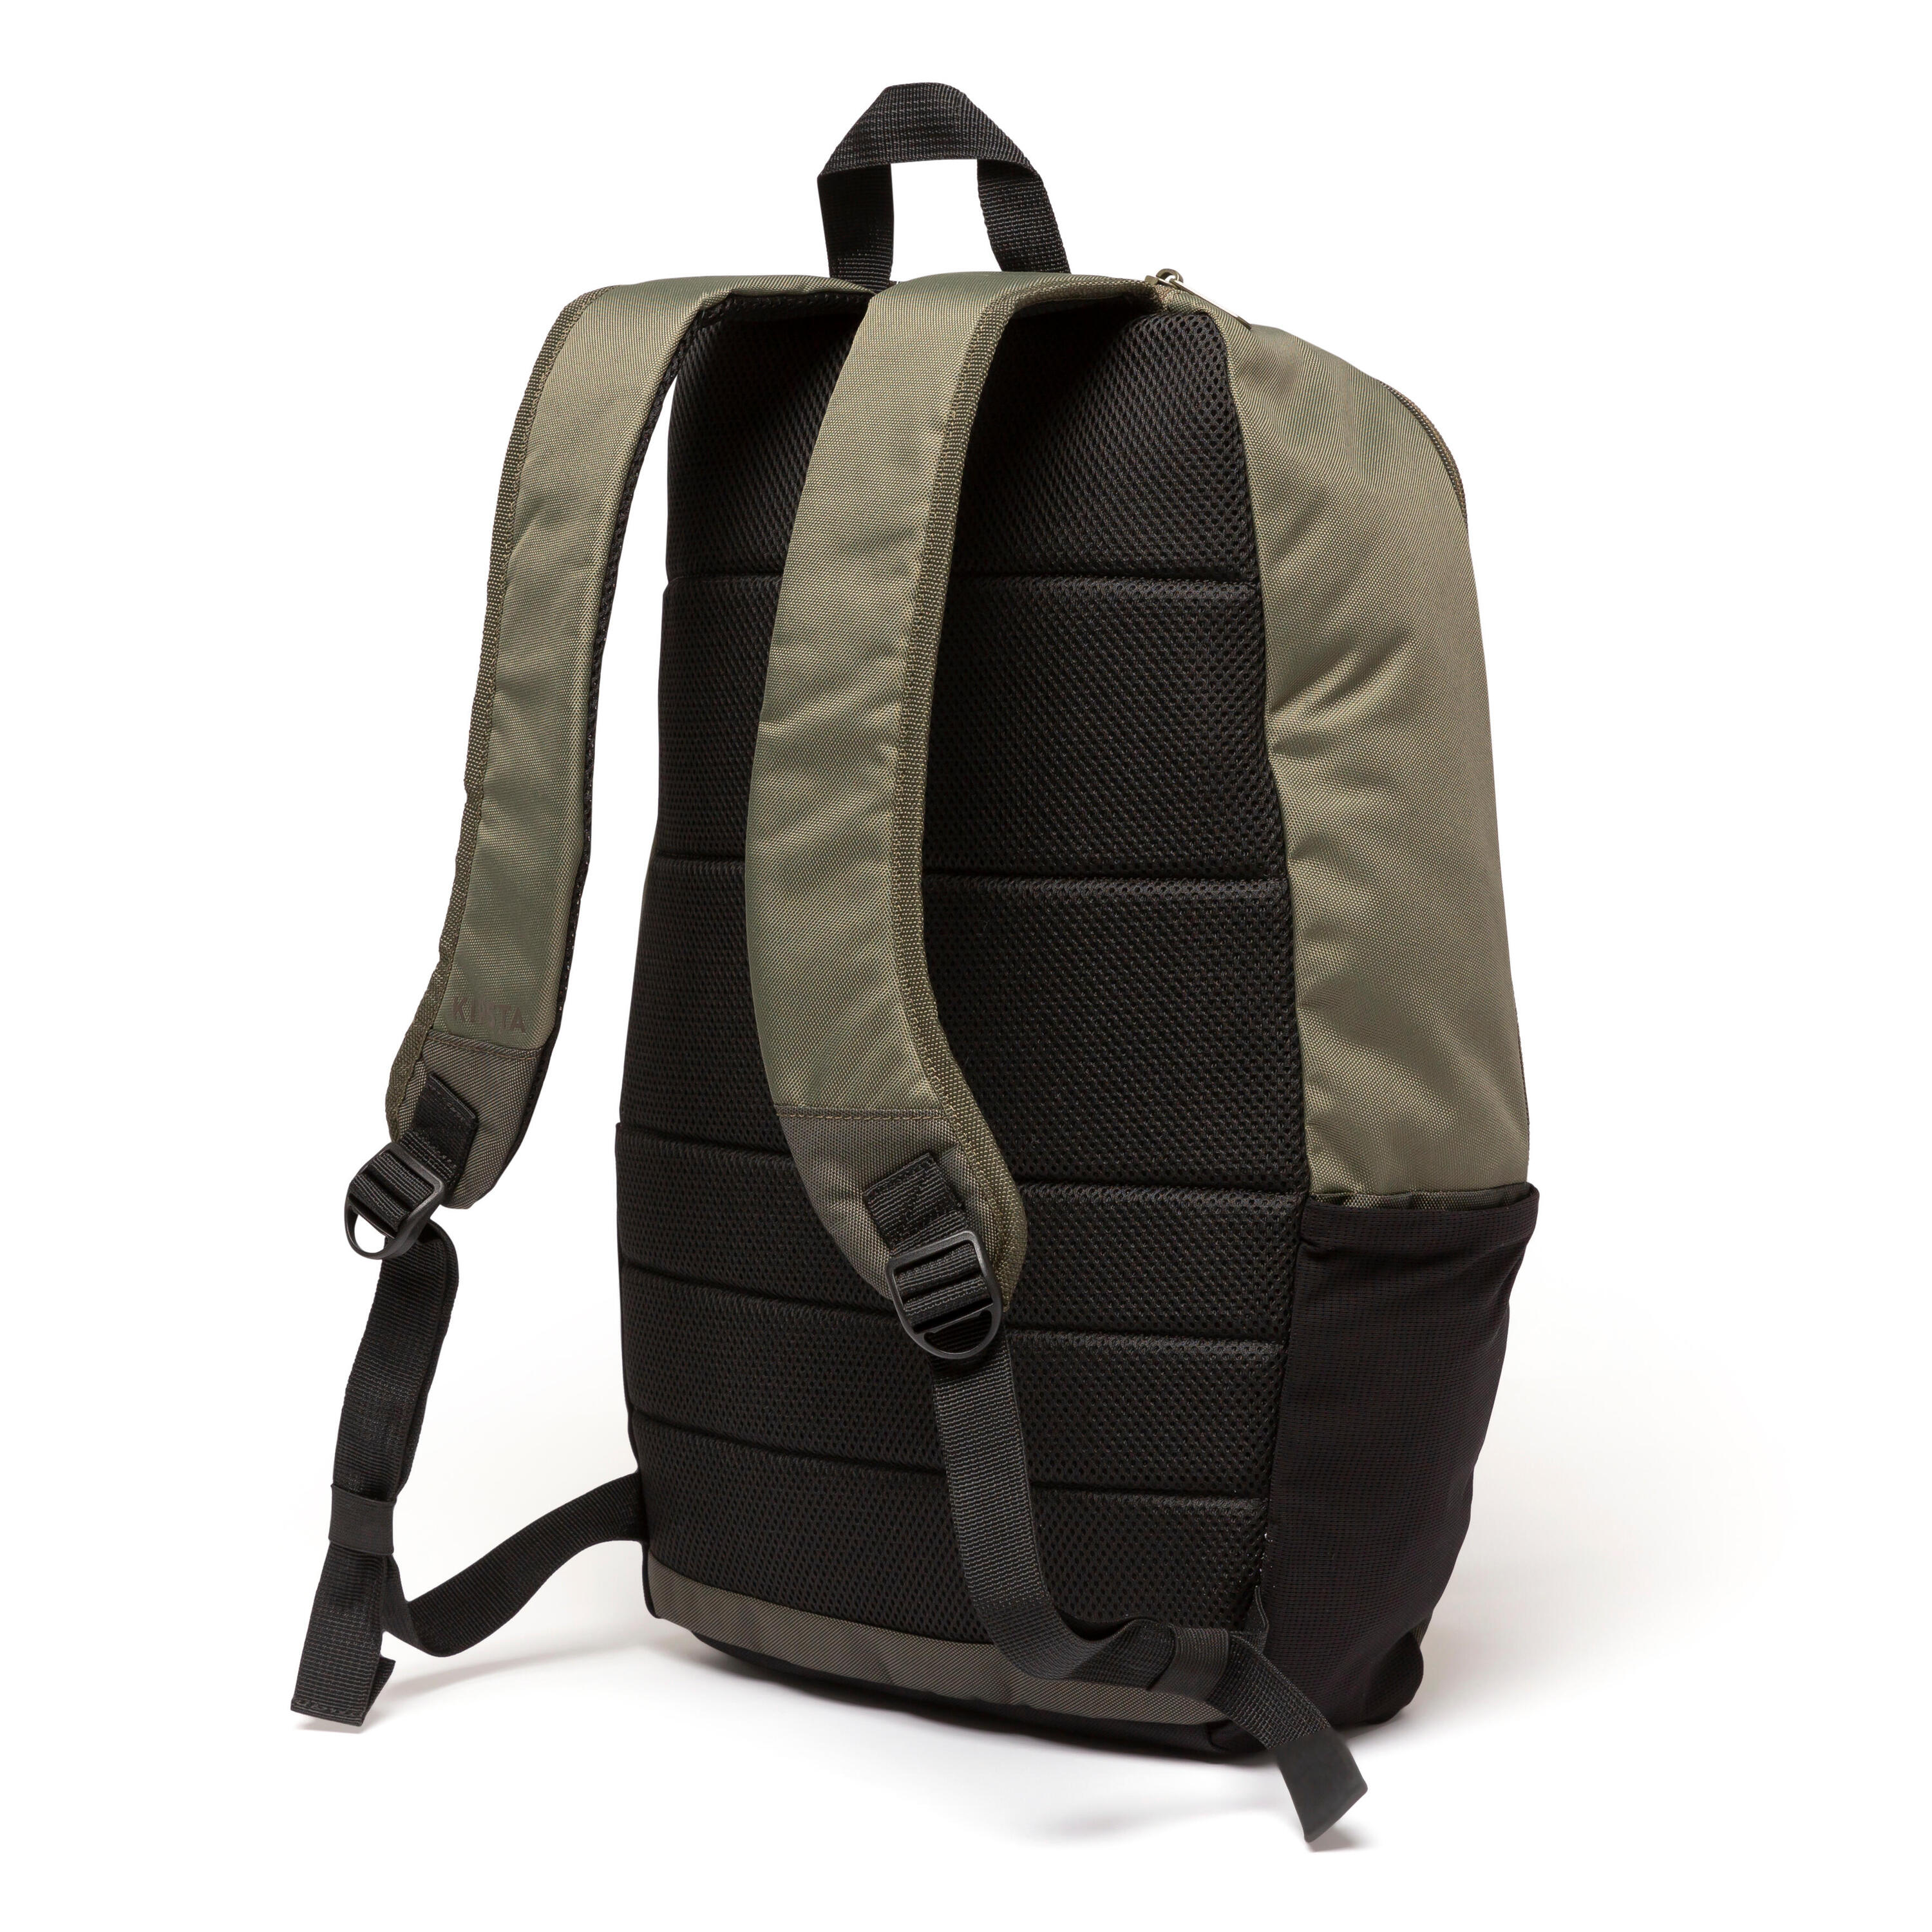 24L Backpack Essential - Khaki 3/9